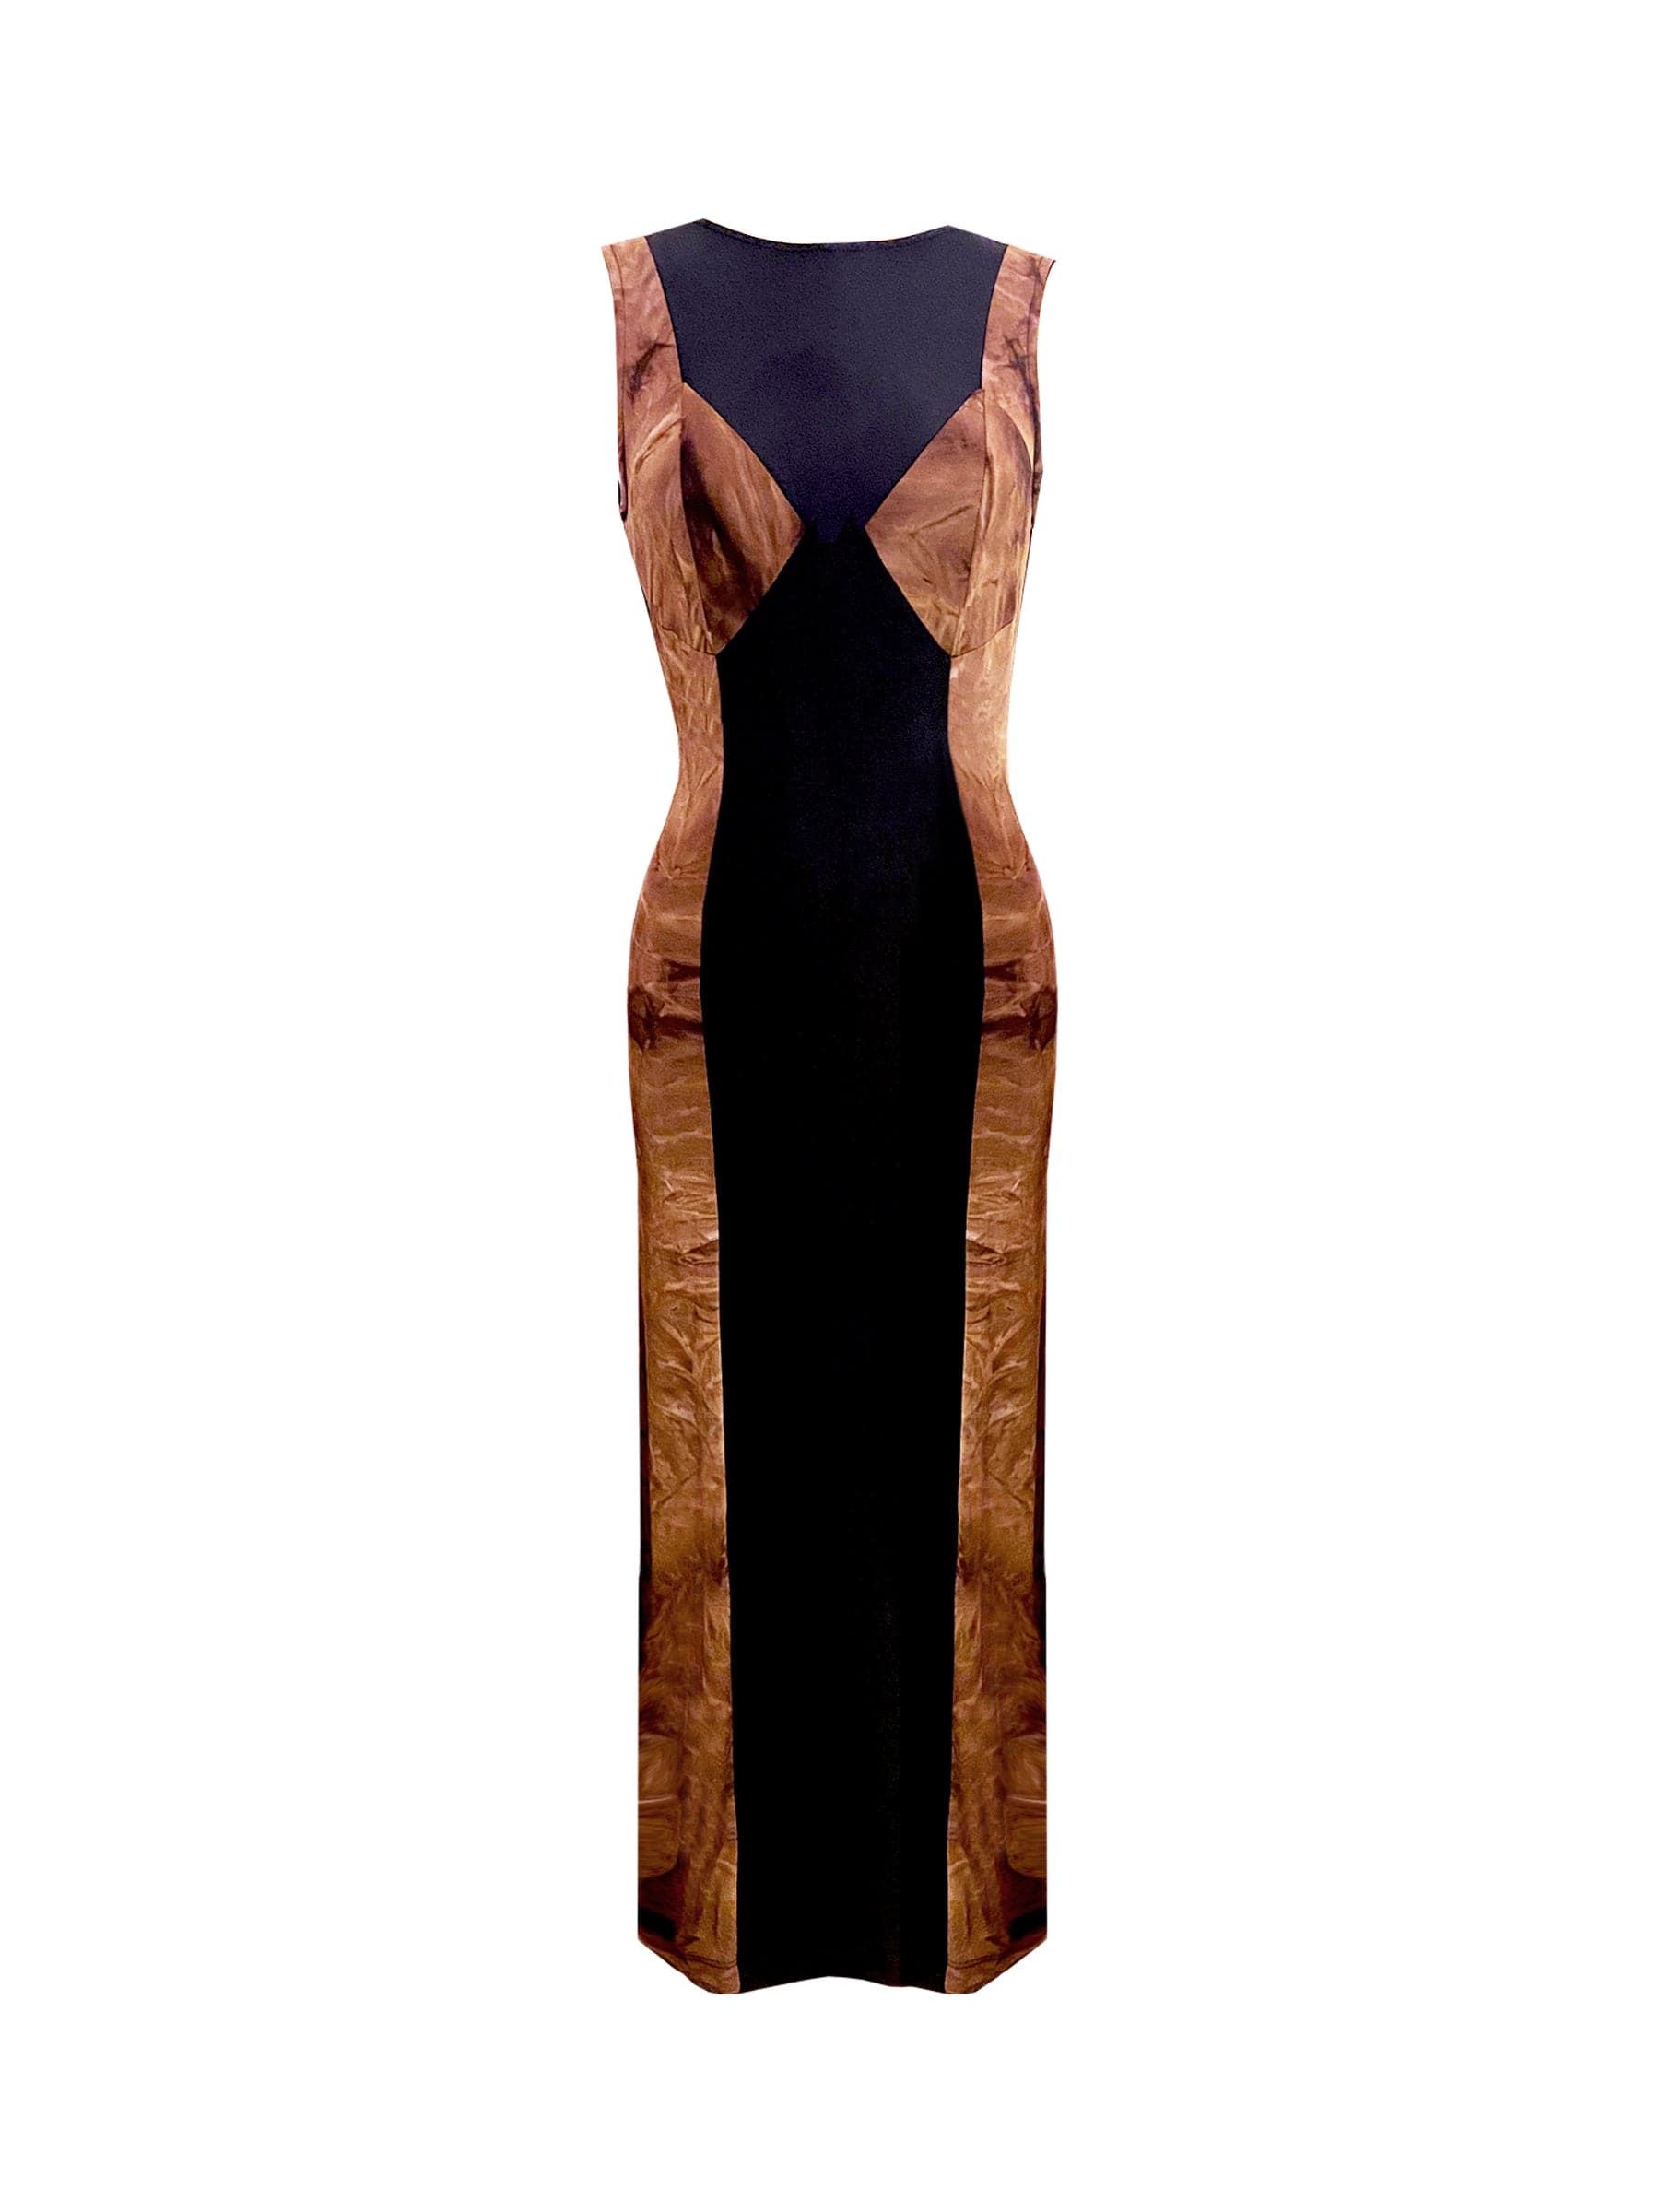 Black and brown tie dye corset spandex dress